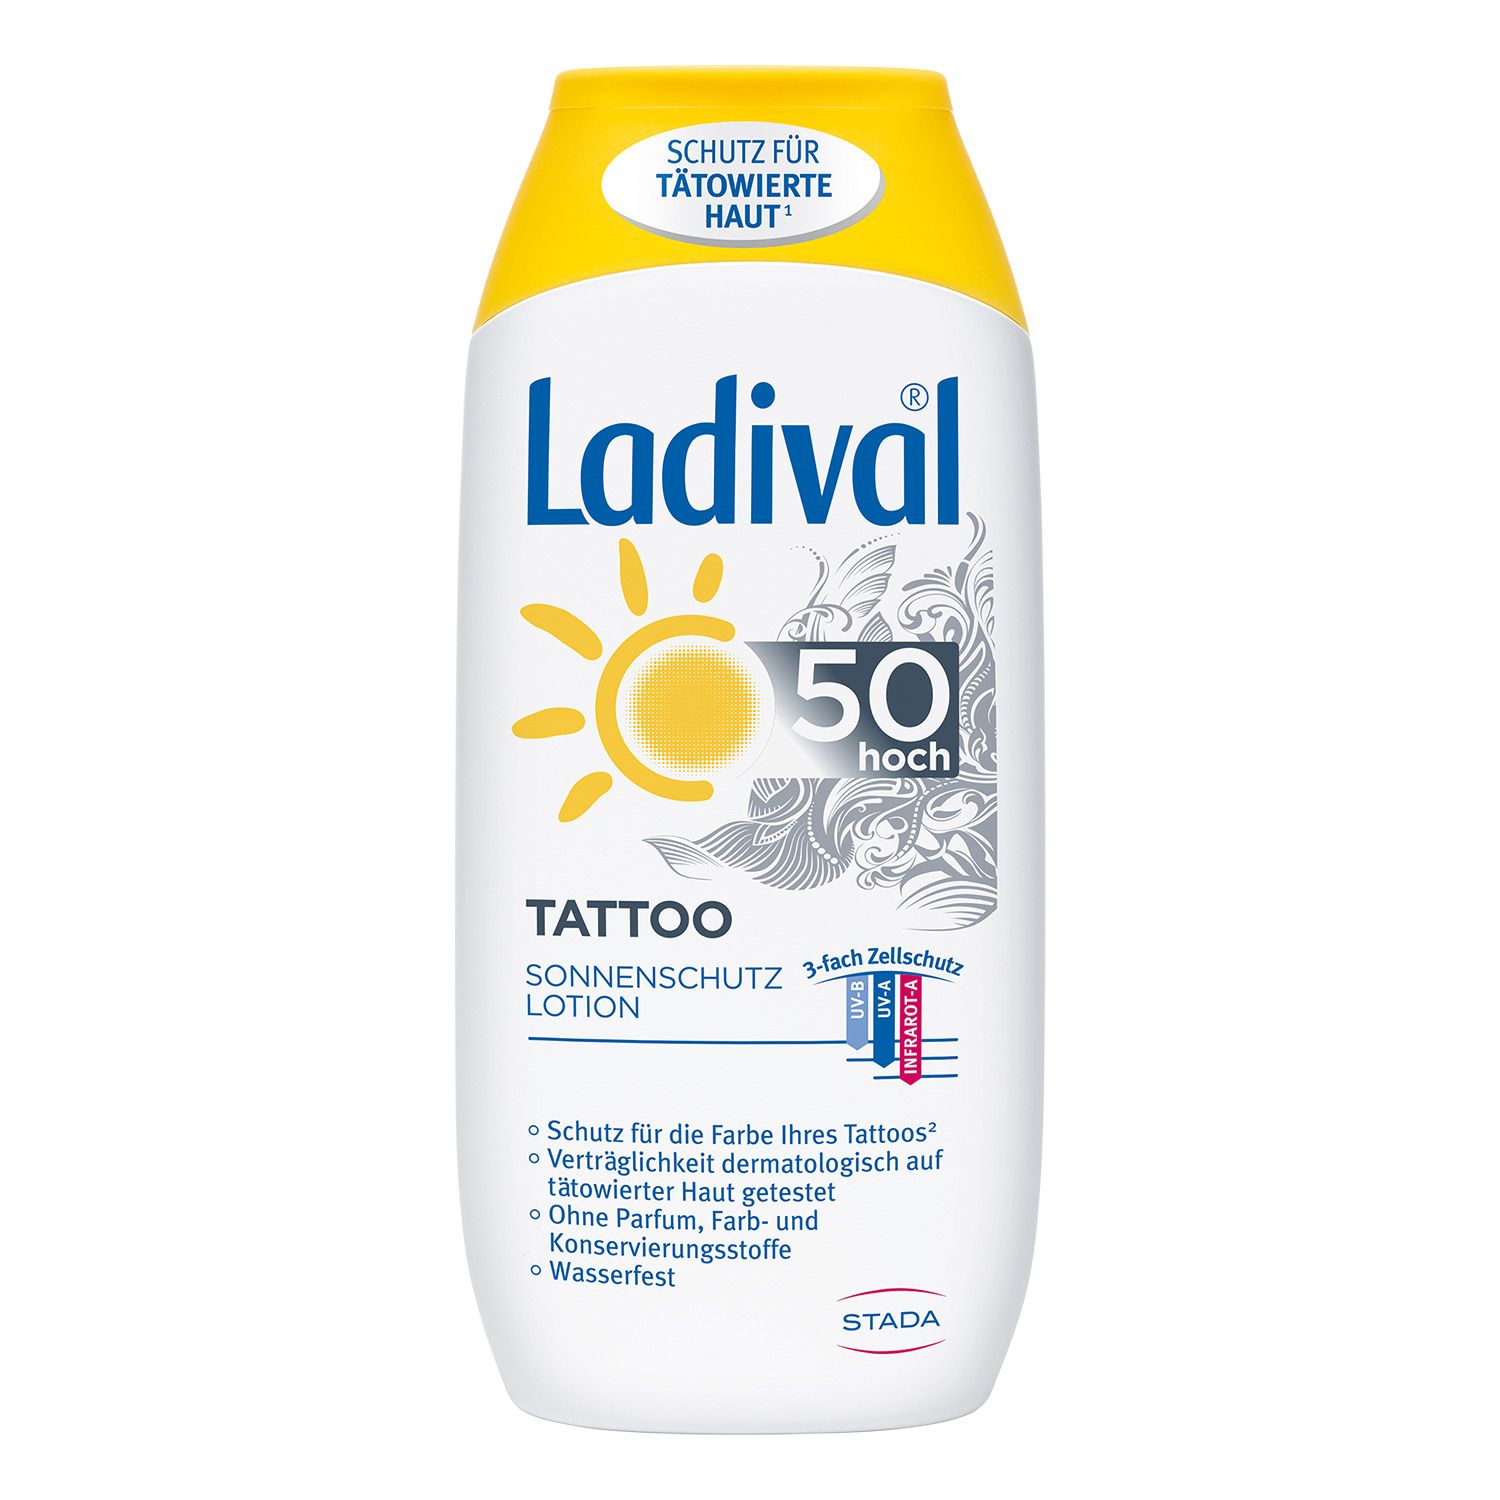 Ladival® Tattoo Sonnenschutz Lotion SPF 50